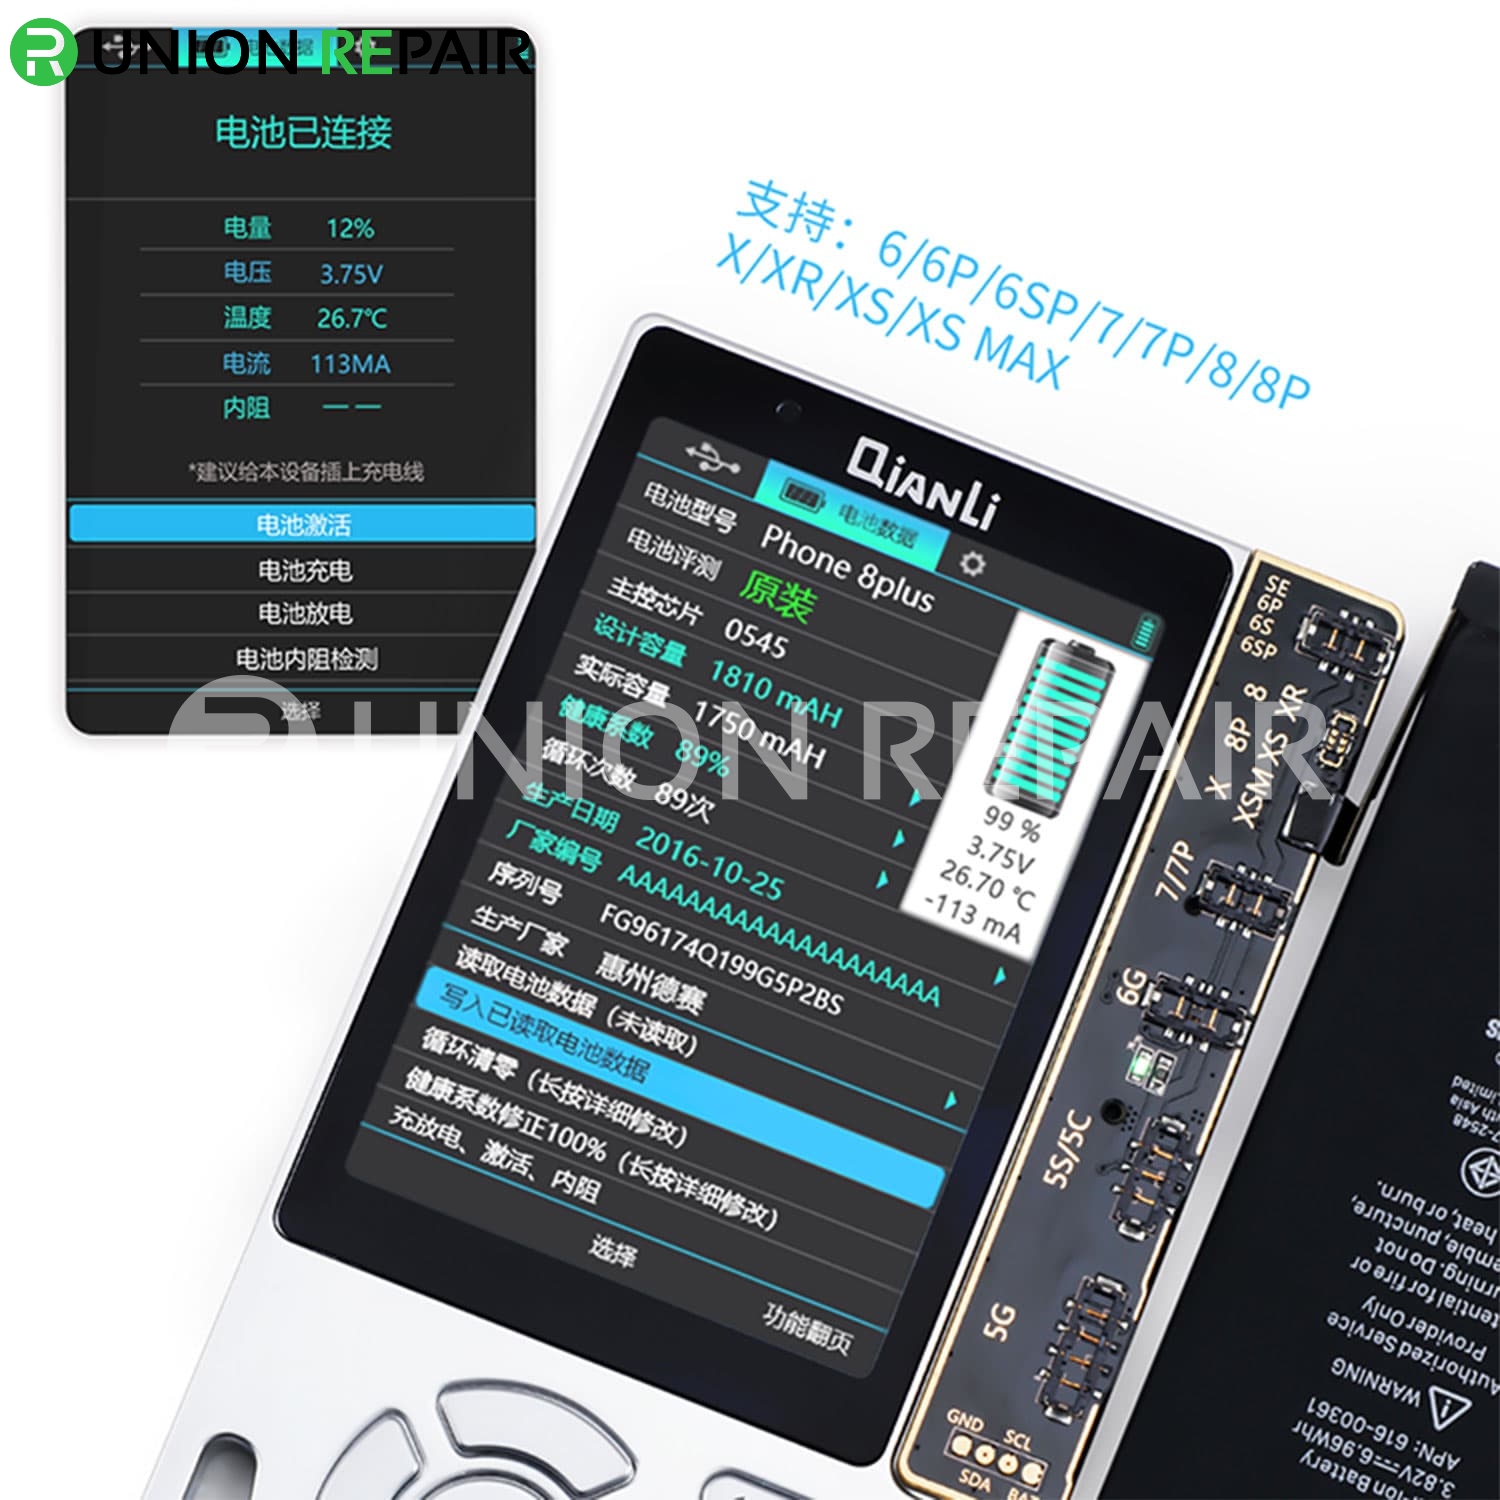 Qianli ToolPlus APOLLO ONE Multifunction Restore Detection Device